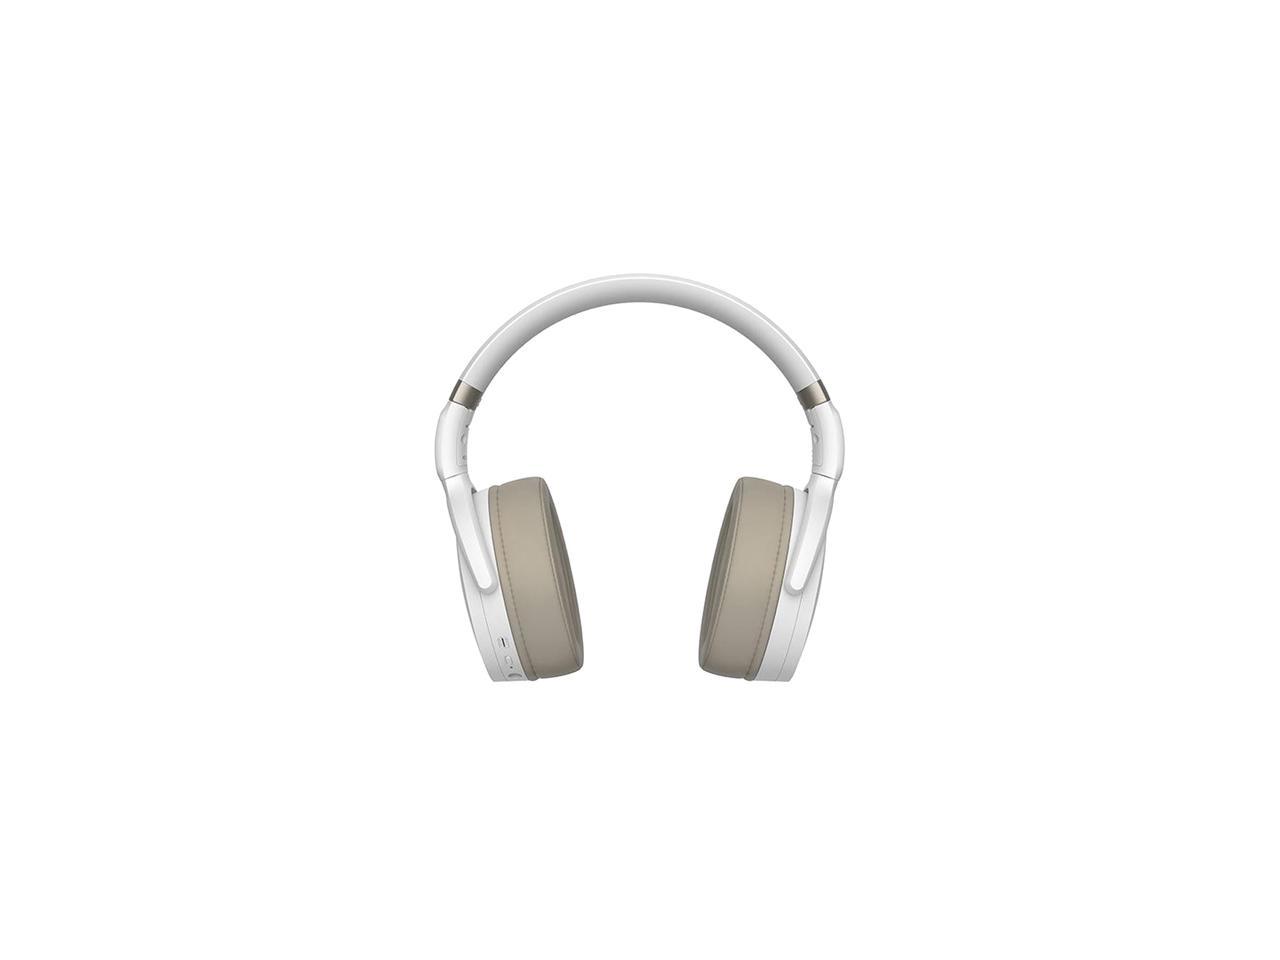 Sennheiser HD 450BT Bluetooth 5.0 Wireless Active Noise Cancellation Headphones - White (508387)